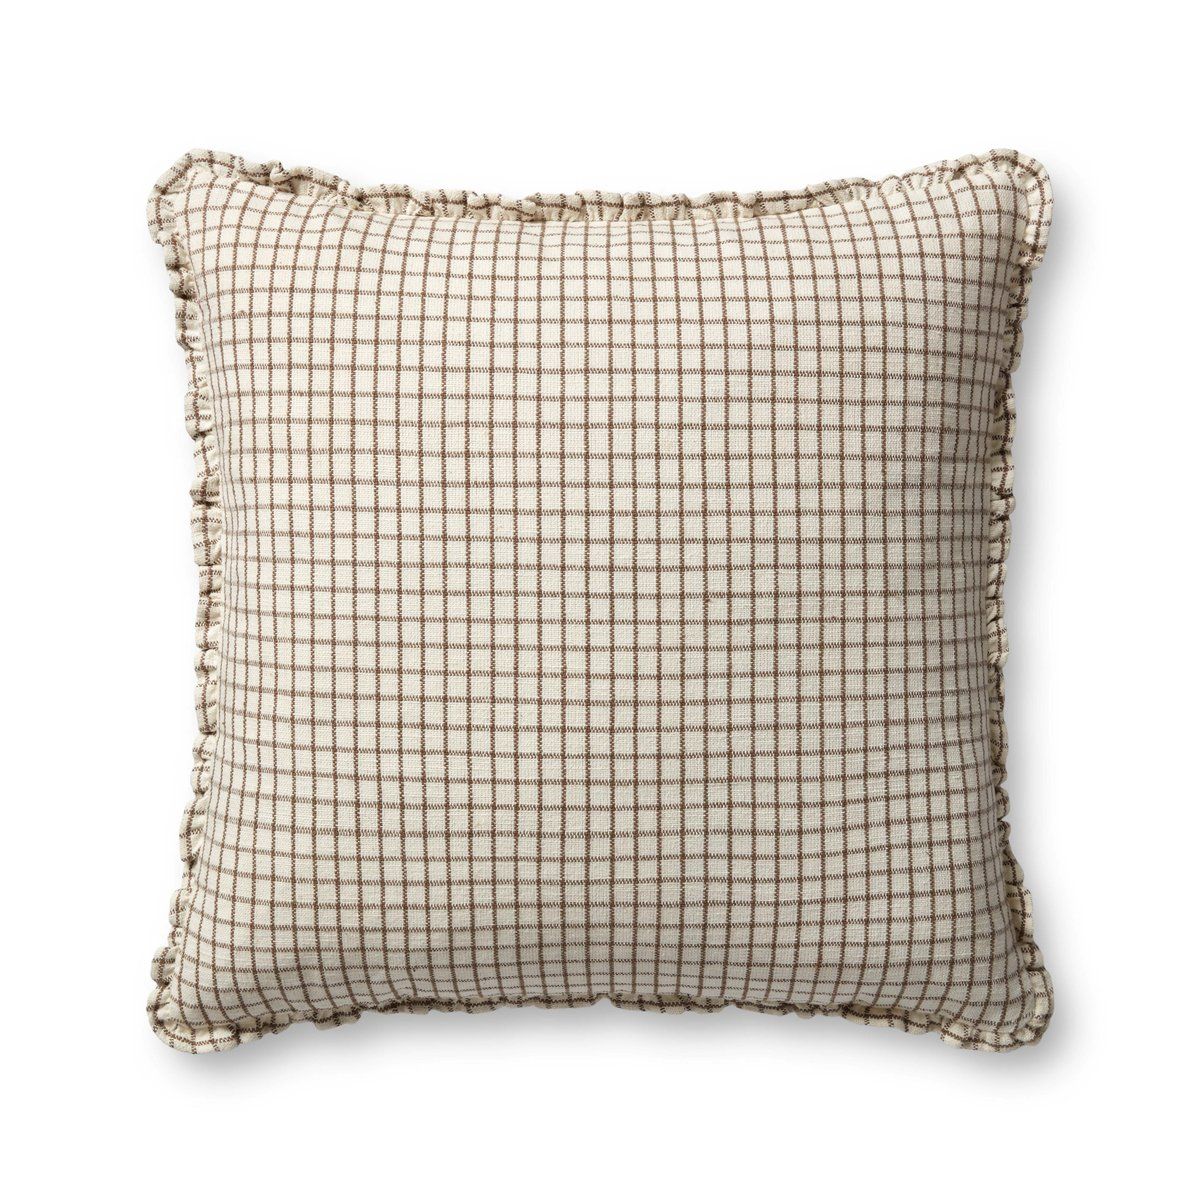 Chris Loves Julia x Loloi Dinah Pillow PCJ-0012 Contemporary / Modern Pillow | Rugs Direct | Rugs Direct